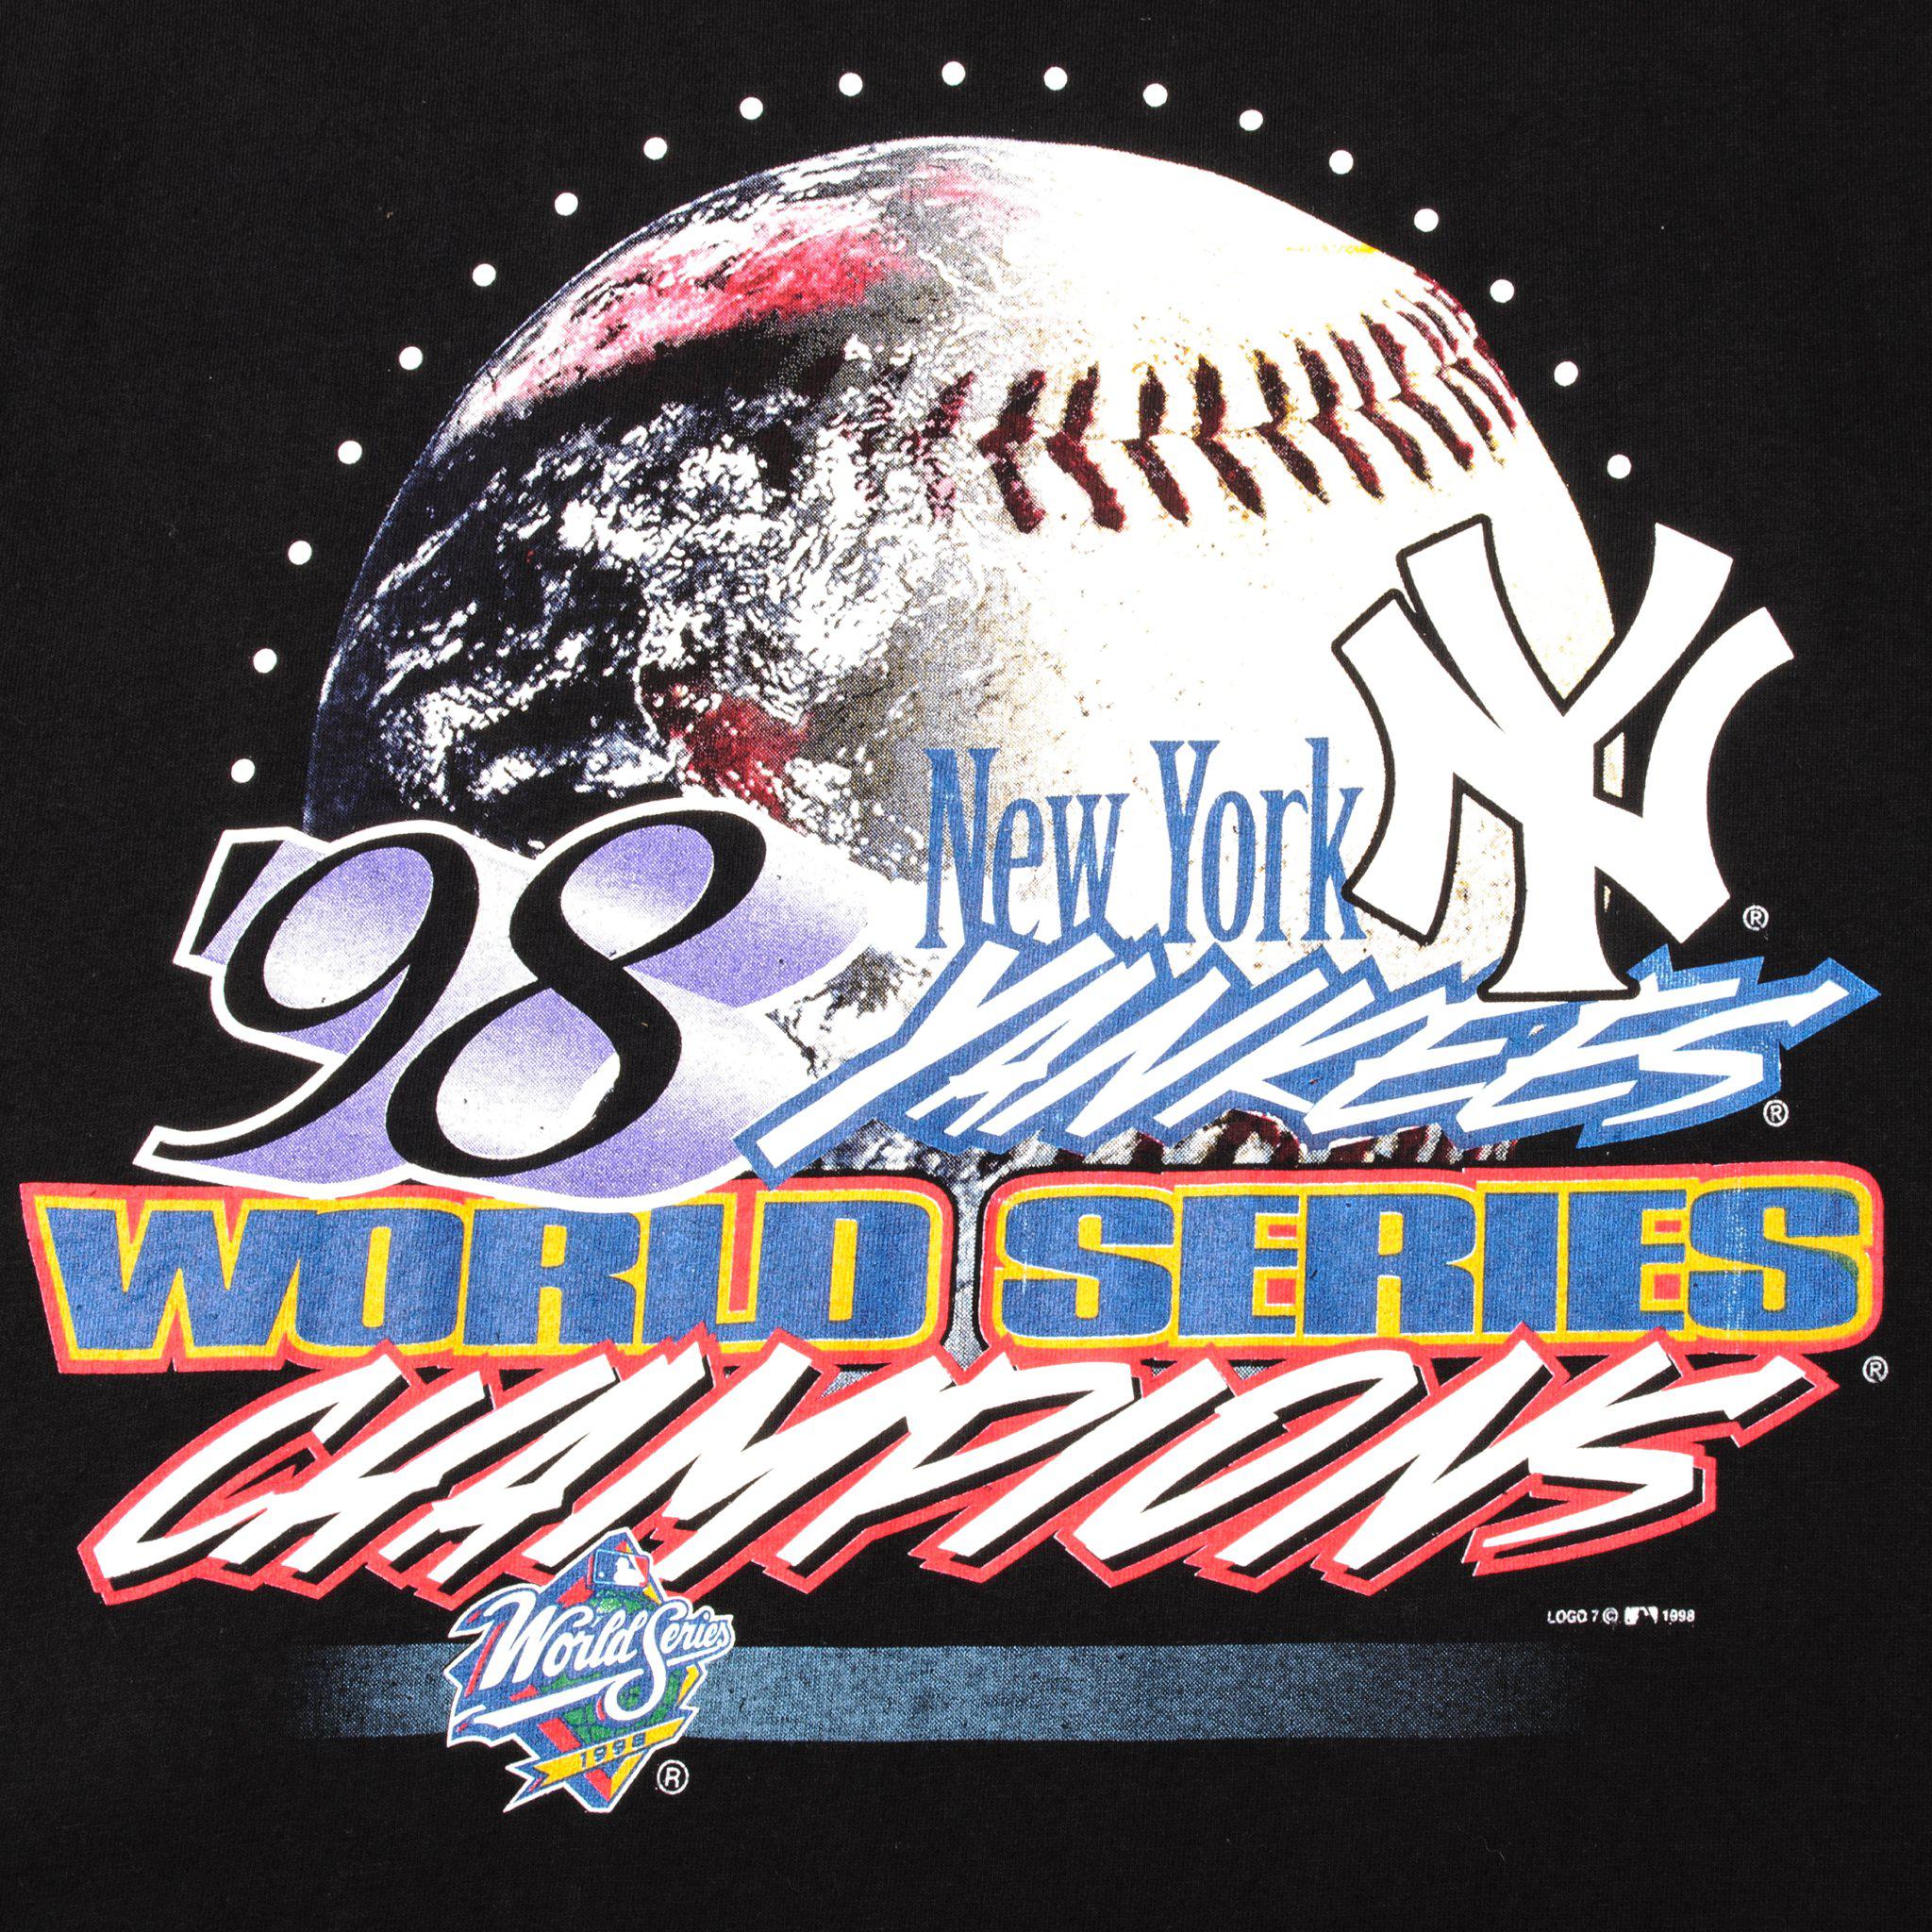 LegacyVintage99 Vintage New York Yankees 1997 T Shirt Tee Pro Layer Made USA Size Large L MLB Bronx 1990s Classic Stadium Sports Baseball 1990s 90s